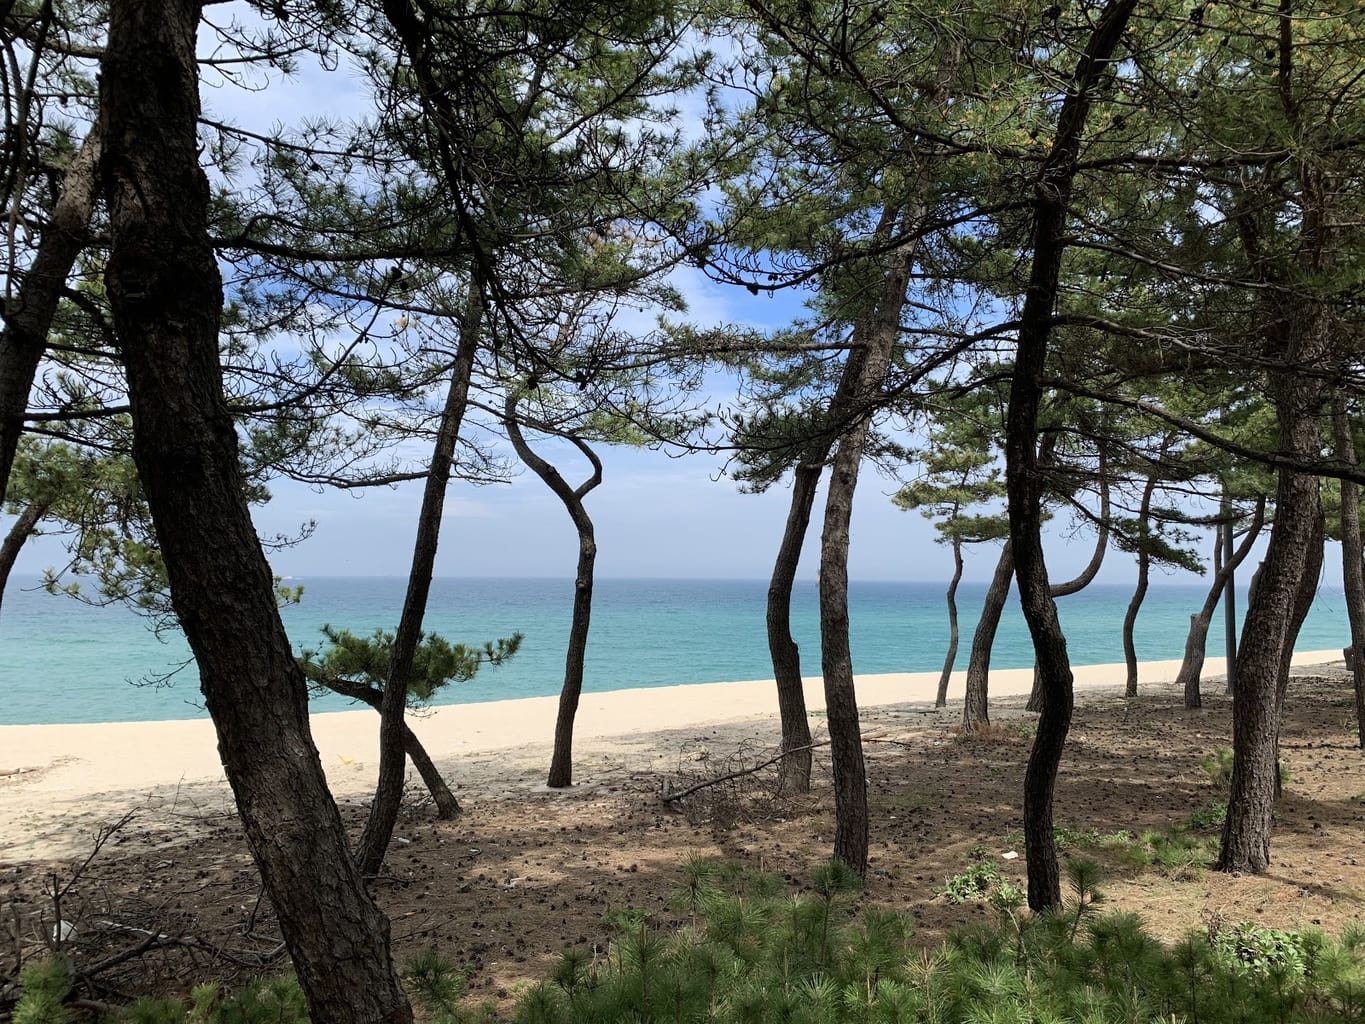 Pine trees on the beaches